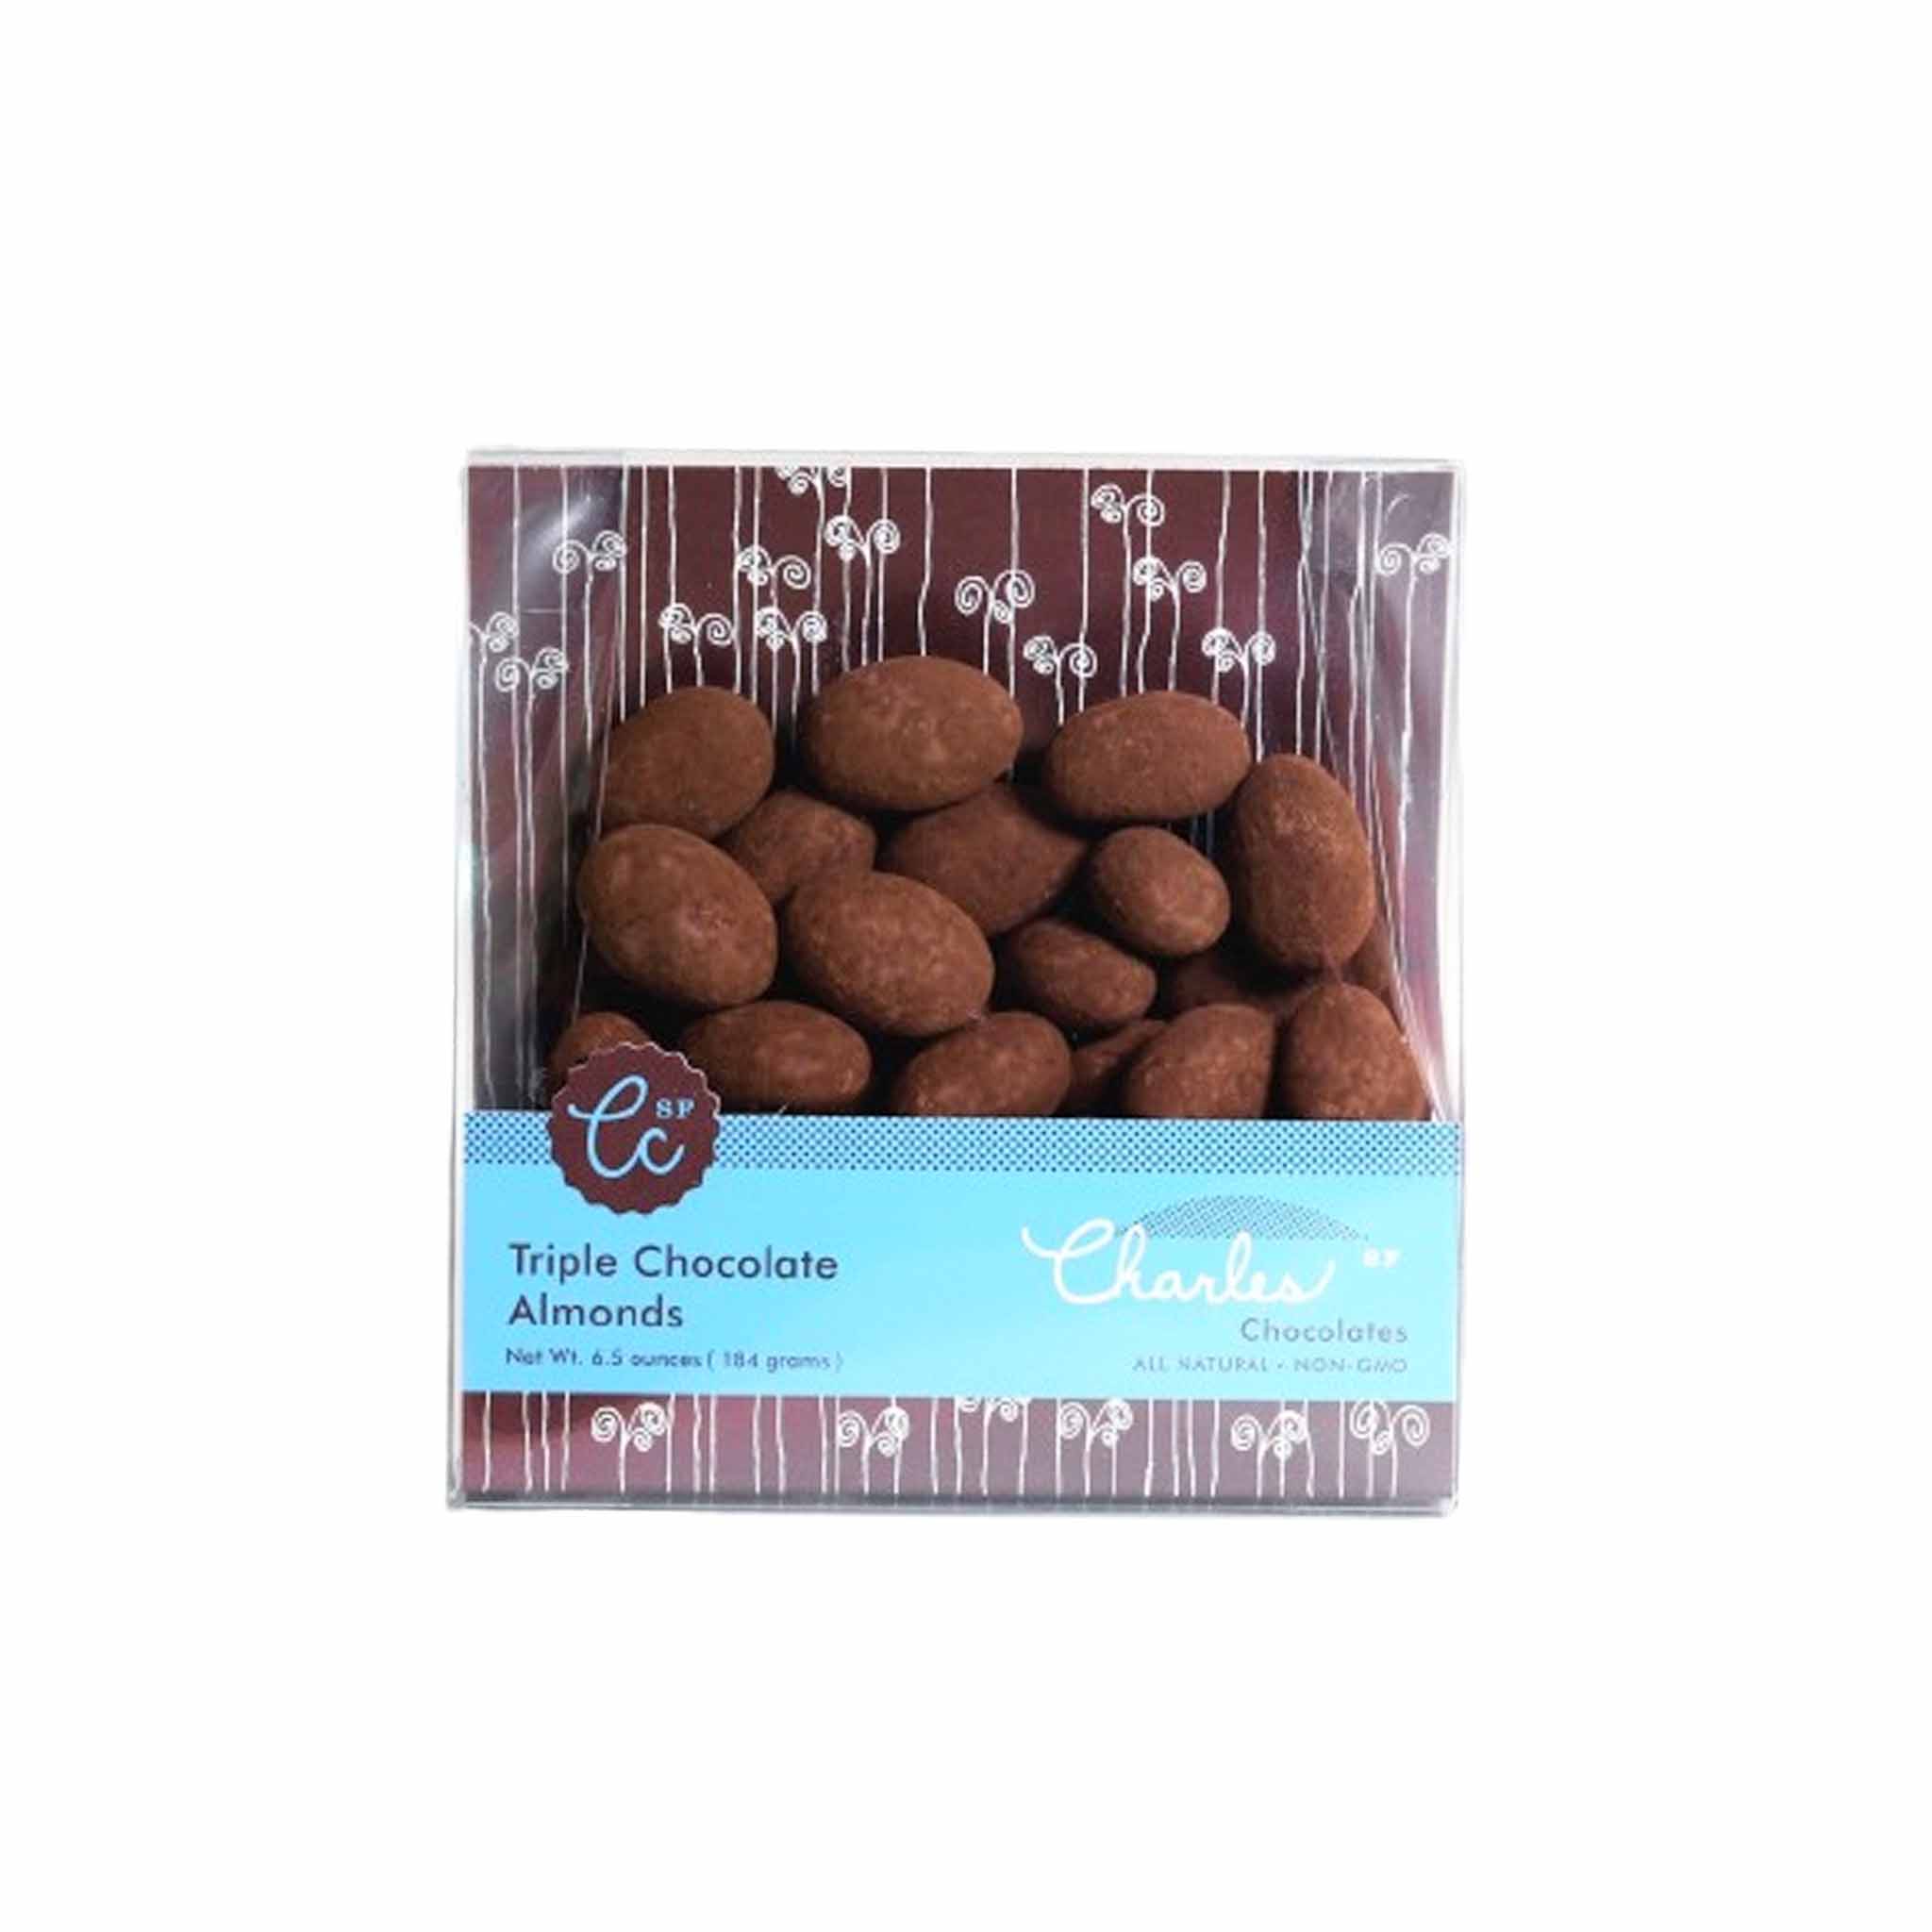 CHARLES CHOCOLATES TRIPLE CHOCOLATE ALMONDS 6.5oz